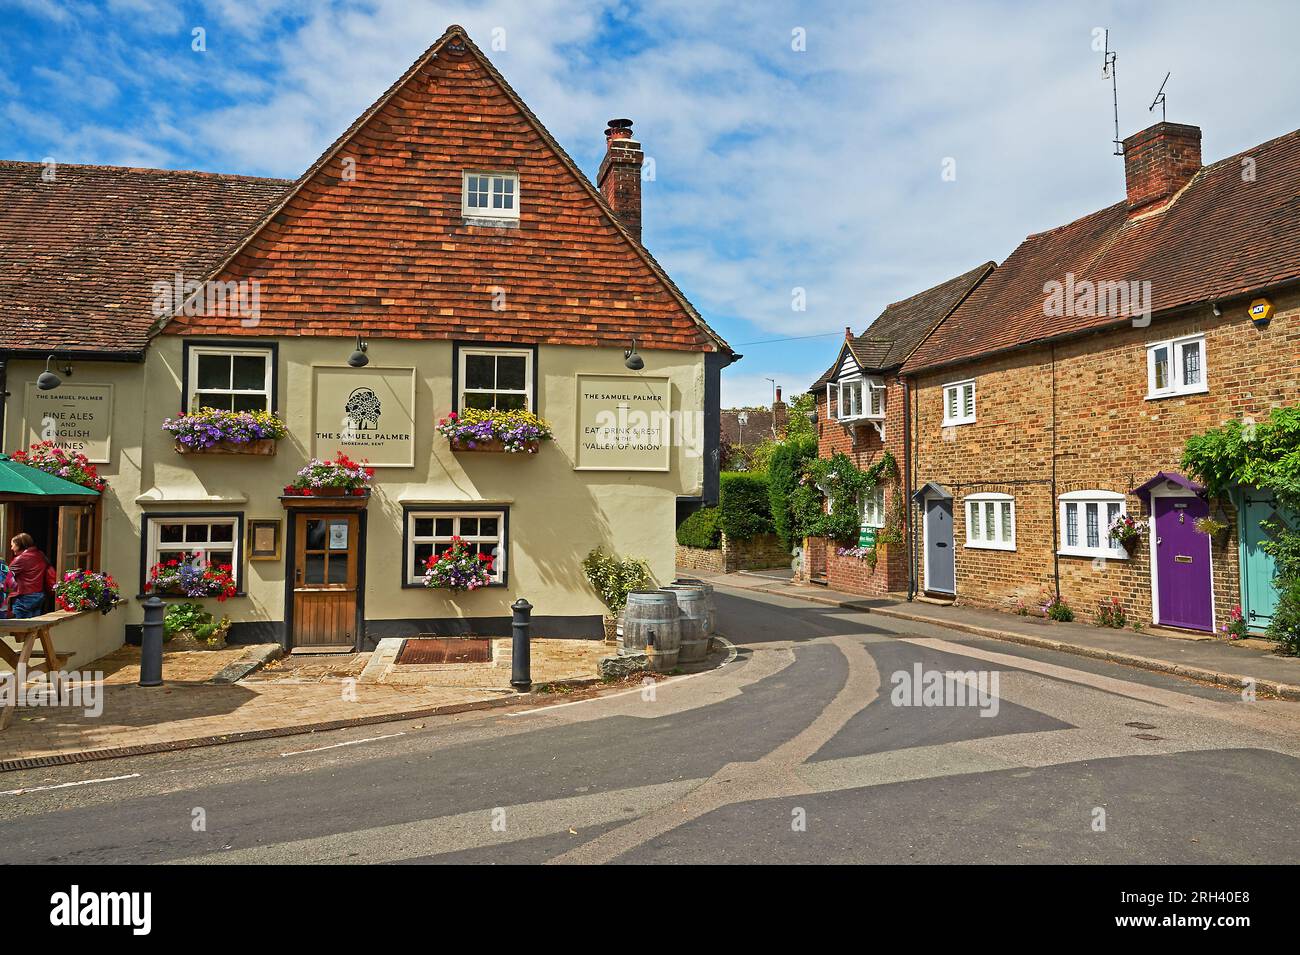 Traditional English pub "The Samuel Palmer" in the Kent village of Shoreham. Stock Photo